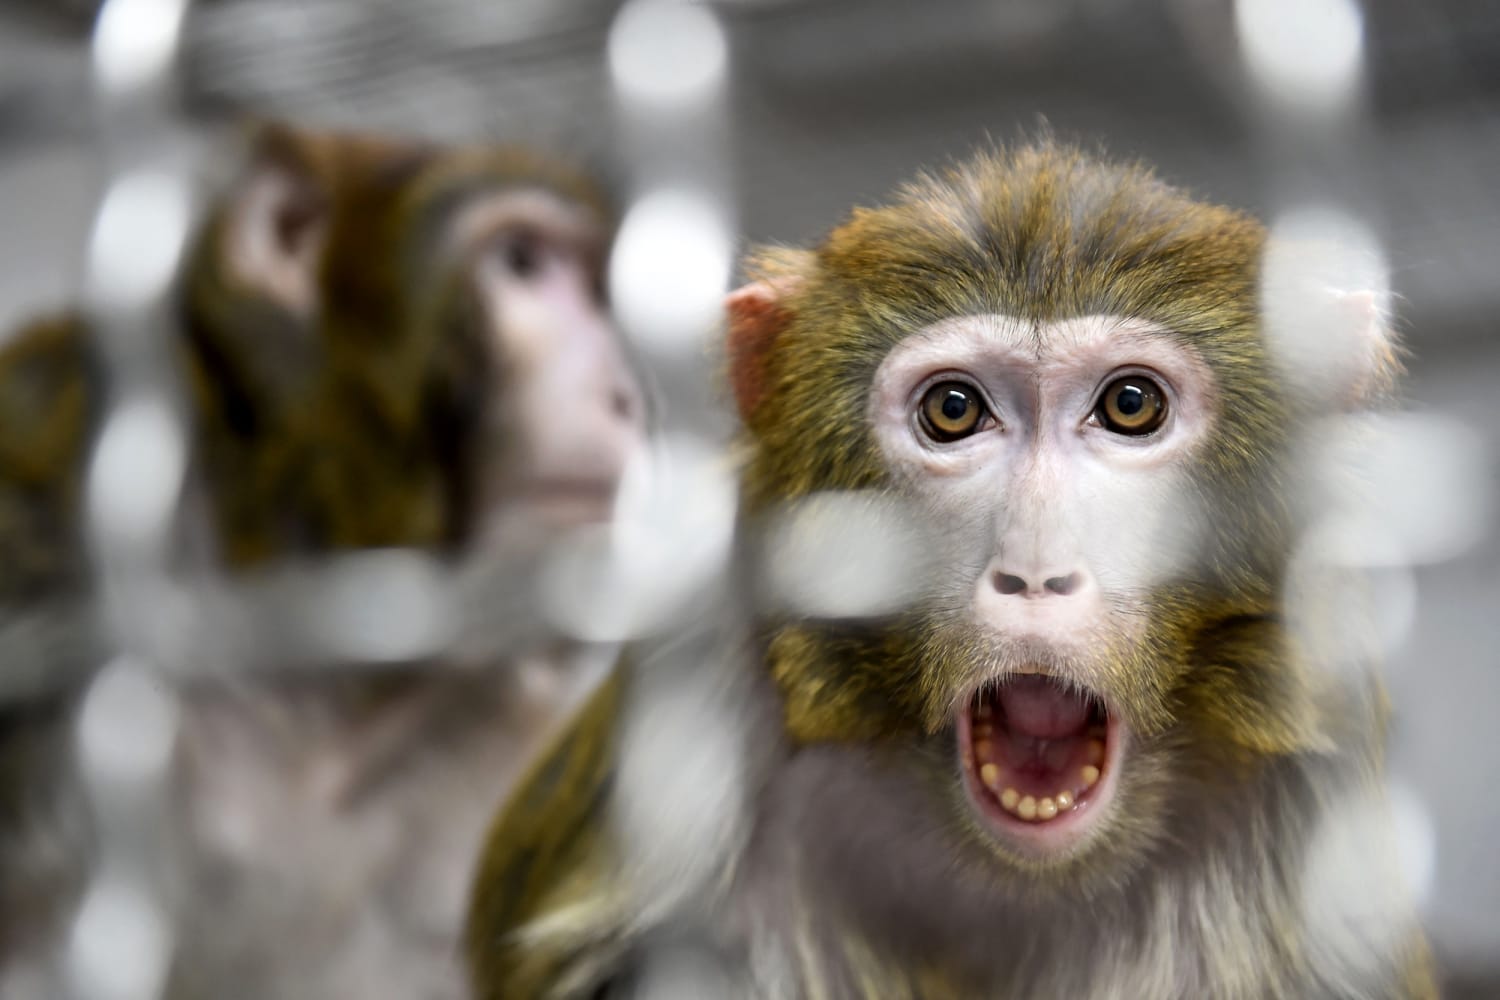 Chinese scientists insert human brain gene into monkeys, spark ethical  debate